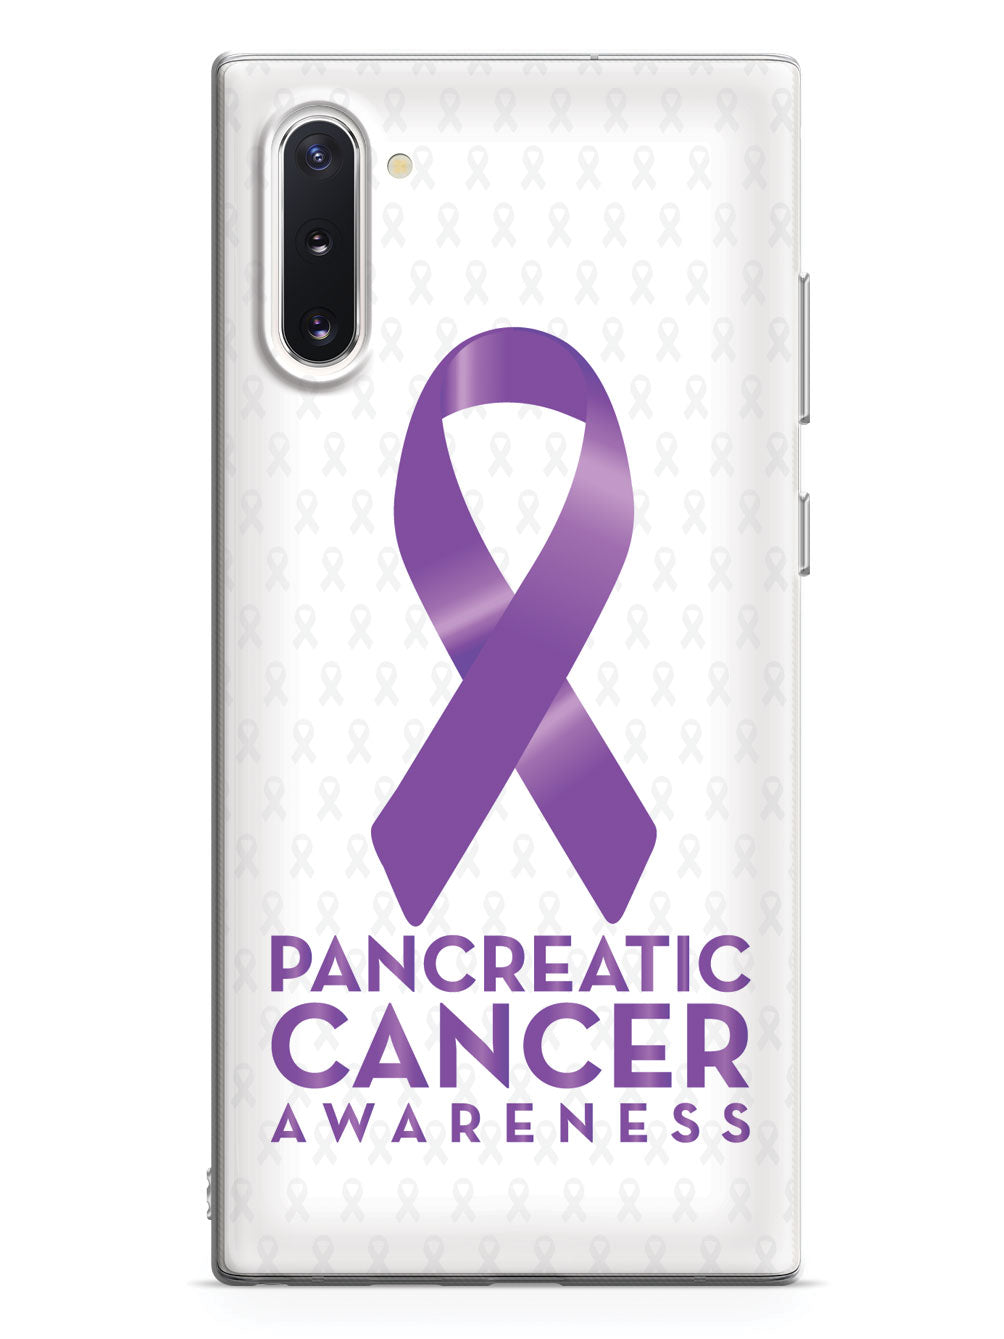 Pancreatic Cancer Awareness - White Case